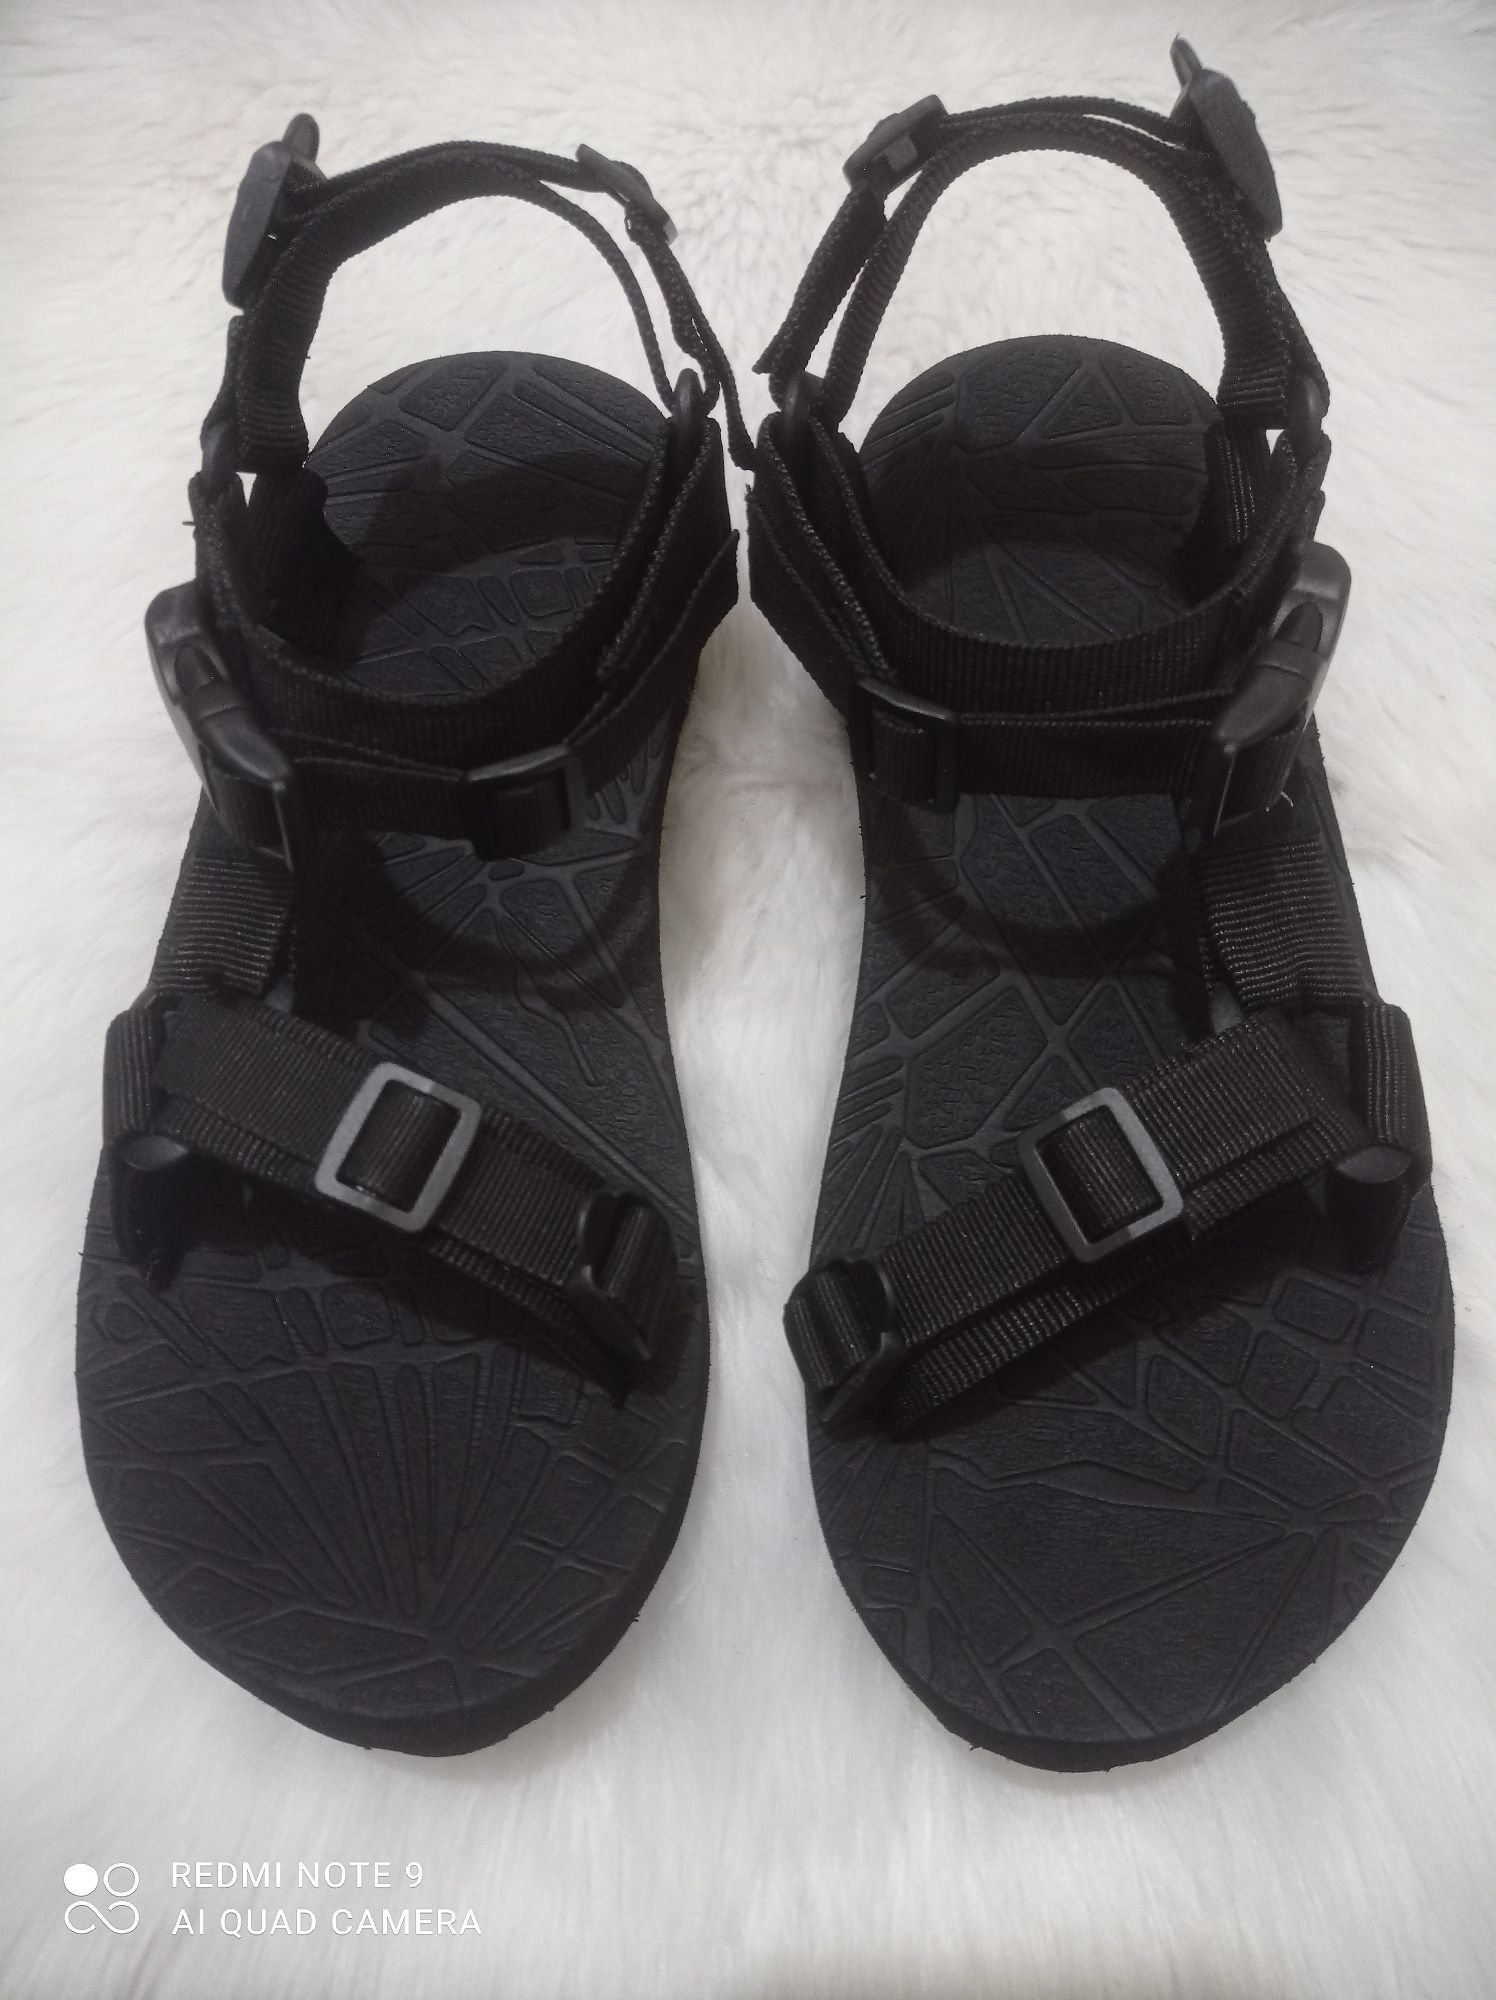 Hiking Sandals / Trekking Sandals / Outdoor Sandals / Sandugo / Made in ...